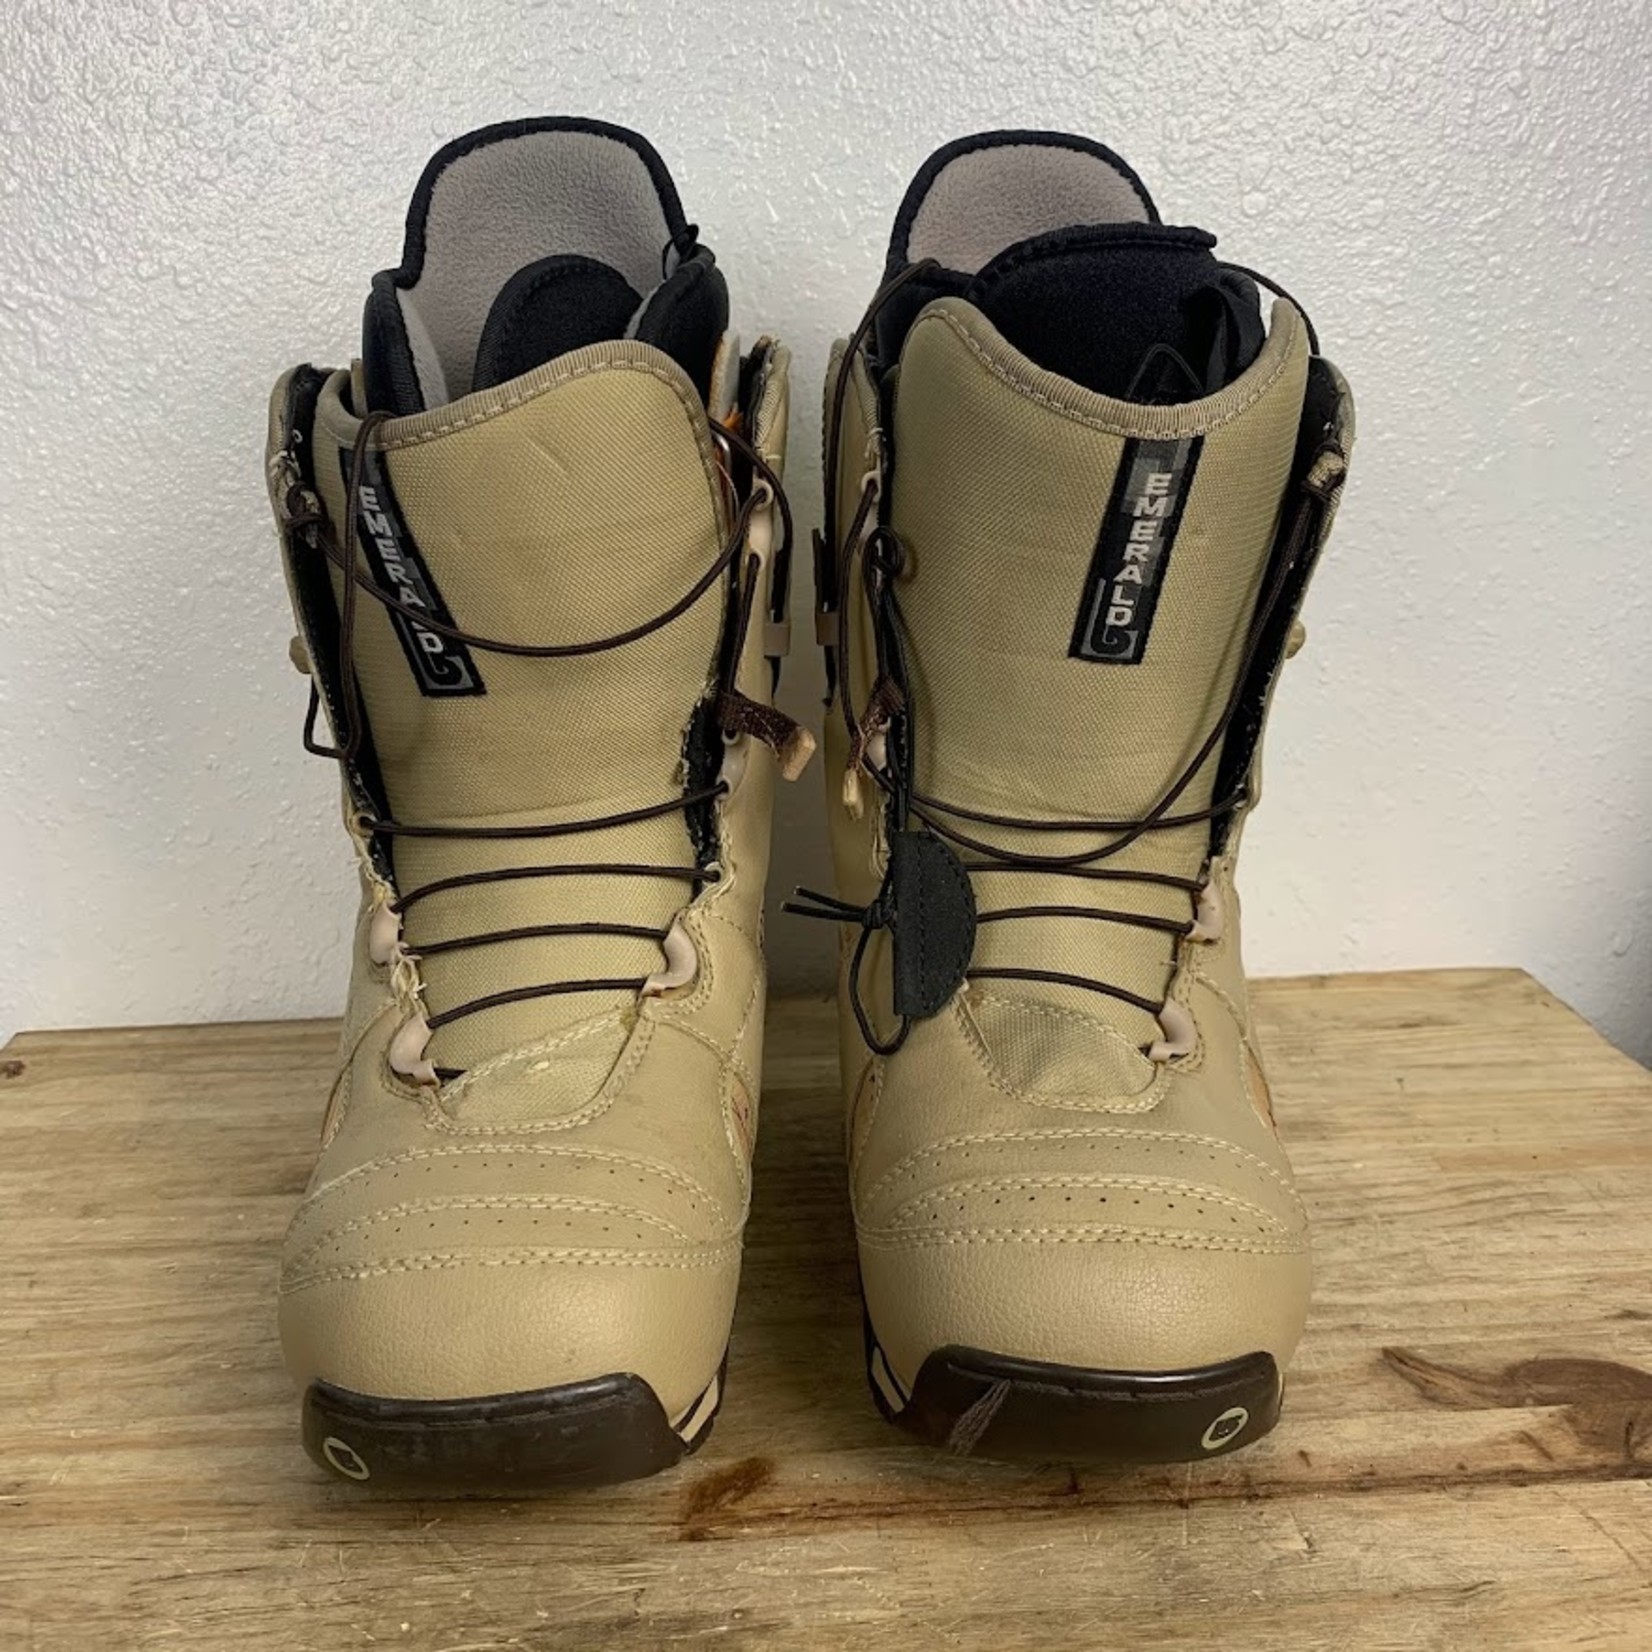 Burton Emerald Snowboard Boots, Size 8 WMNS